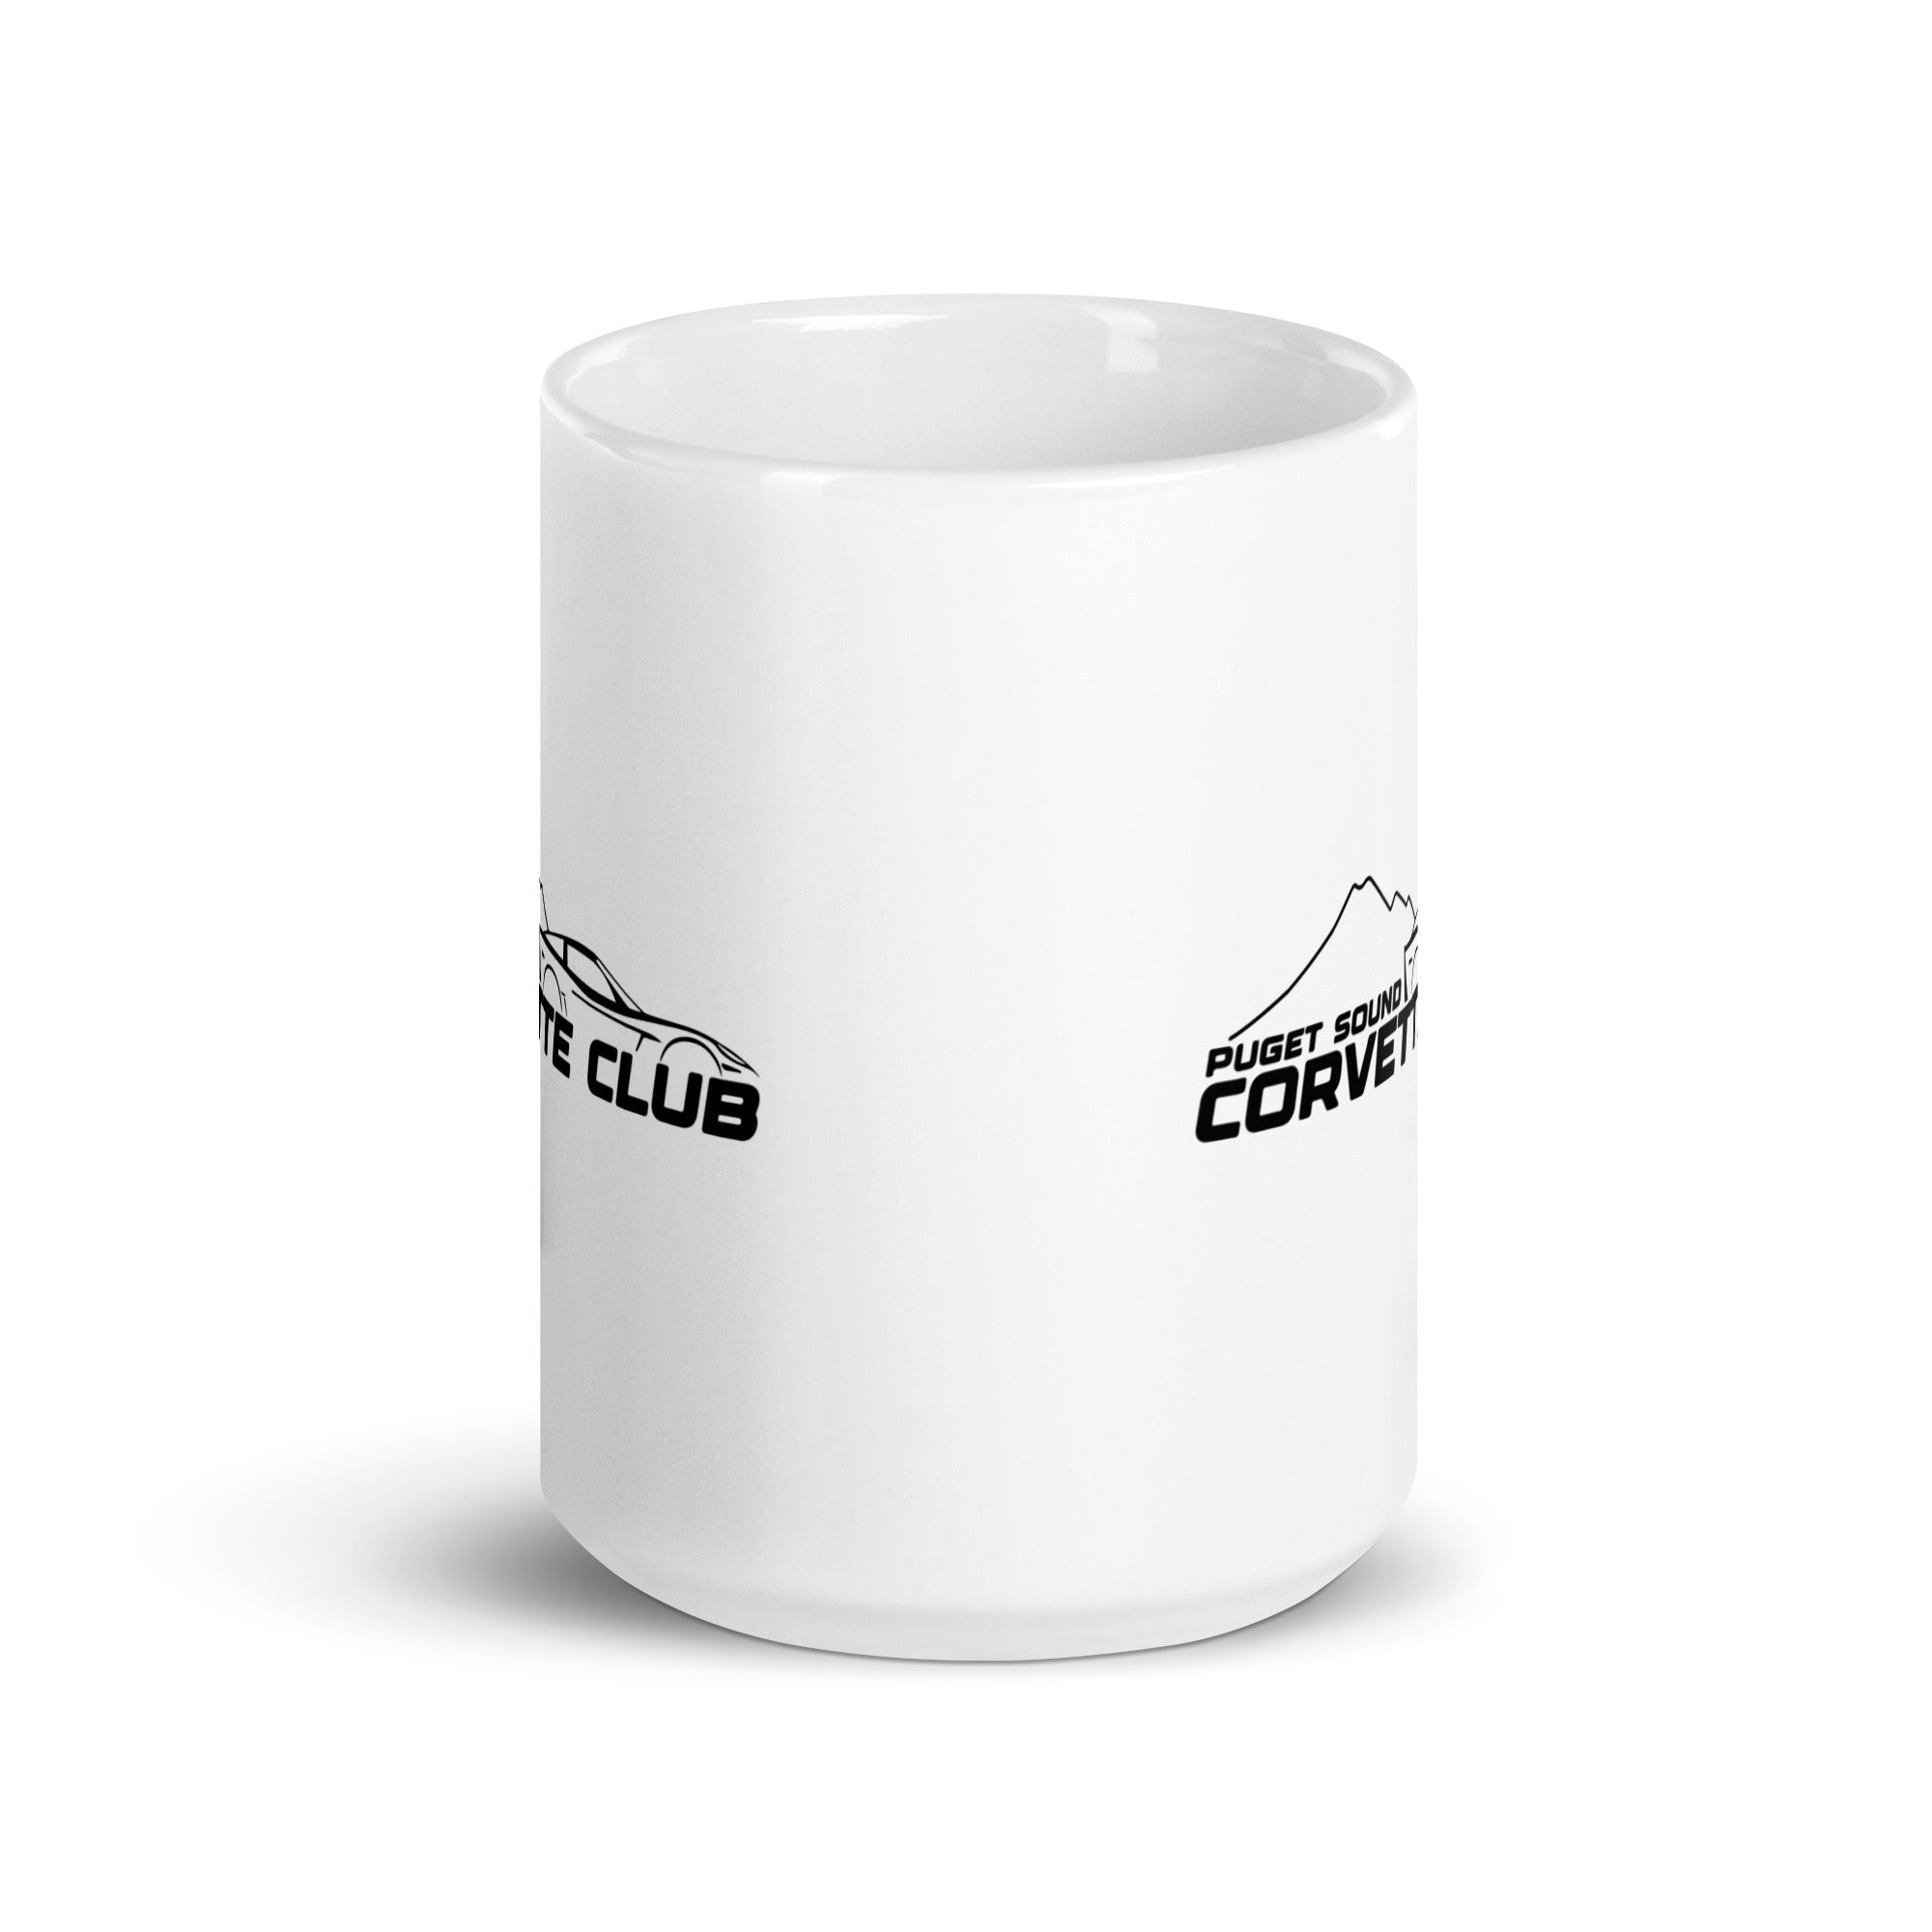 PSCC White glossy mug